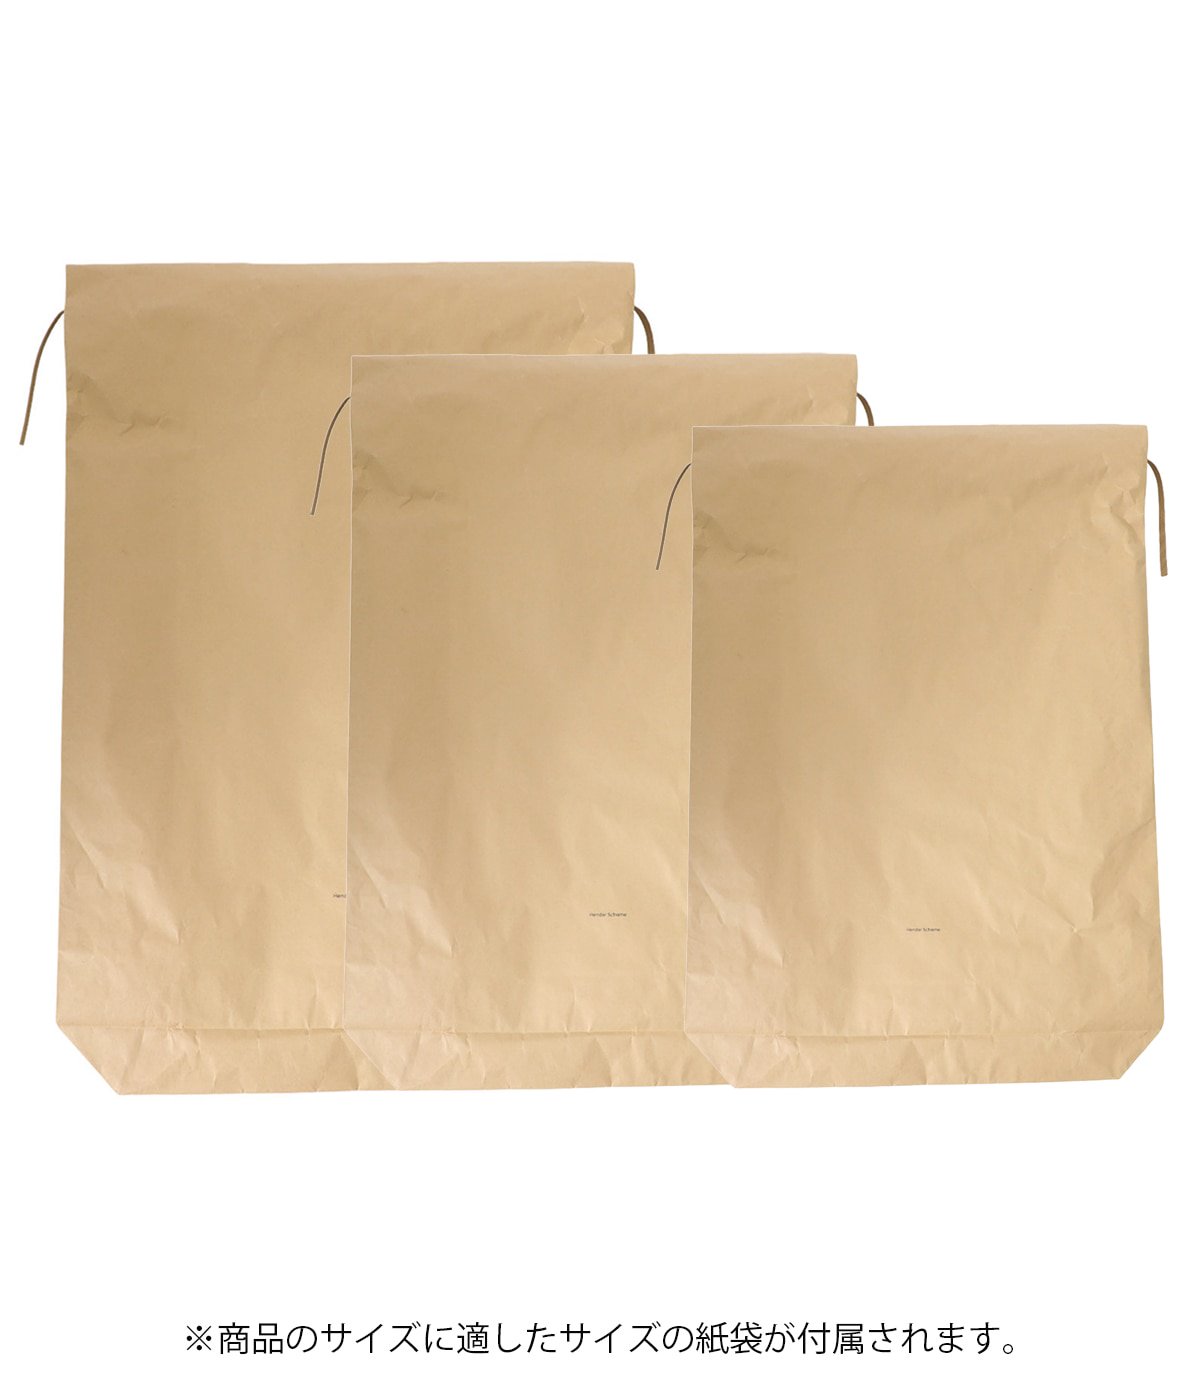 piano bag medium | Hender Scheme(エンダースキーマ) / バッグ トートバッグ (メンズ レディース)の通販